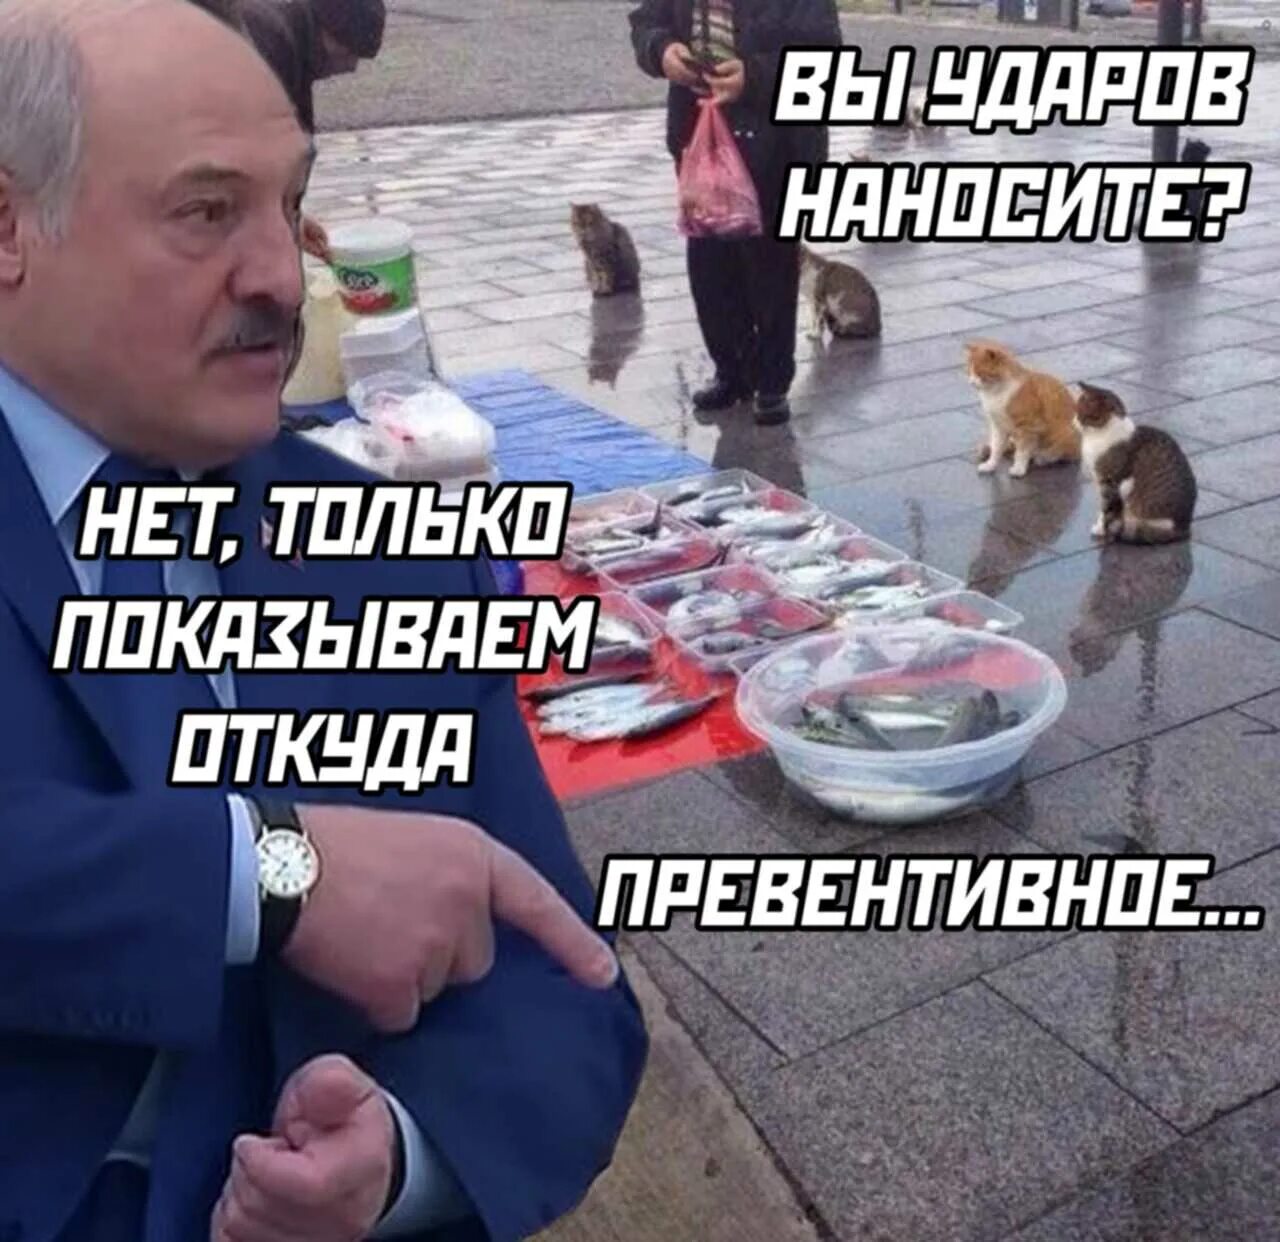 Откуда нападение на беларусь. Лукашенко мемы про нападение. Лукашенко Мем про нападение. Мемы с Лукашенко 2022. Лукашенко а сейчас вам покажу Мем.